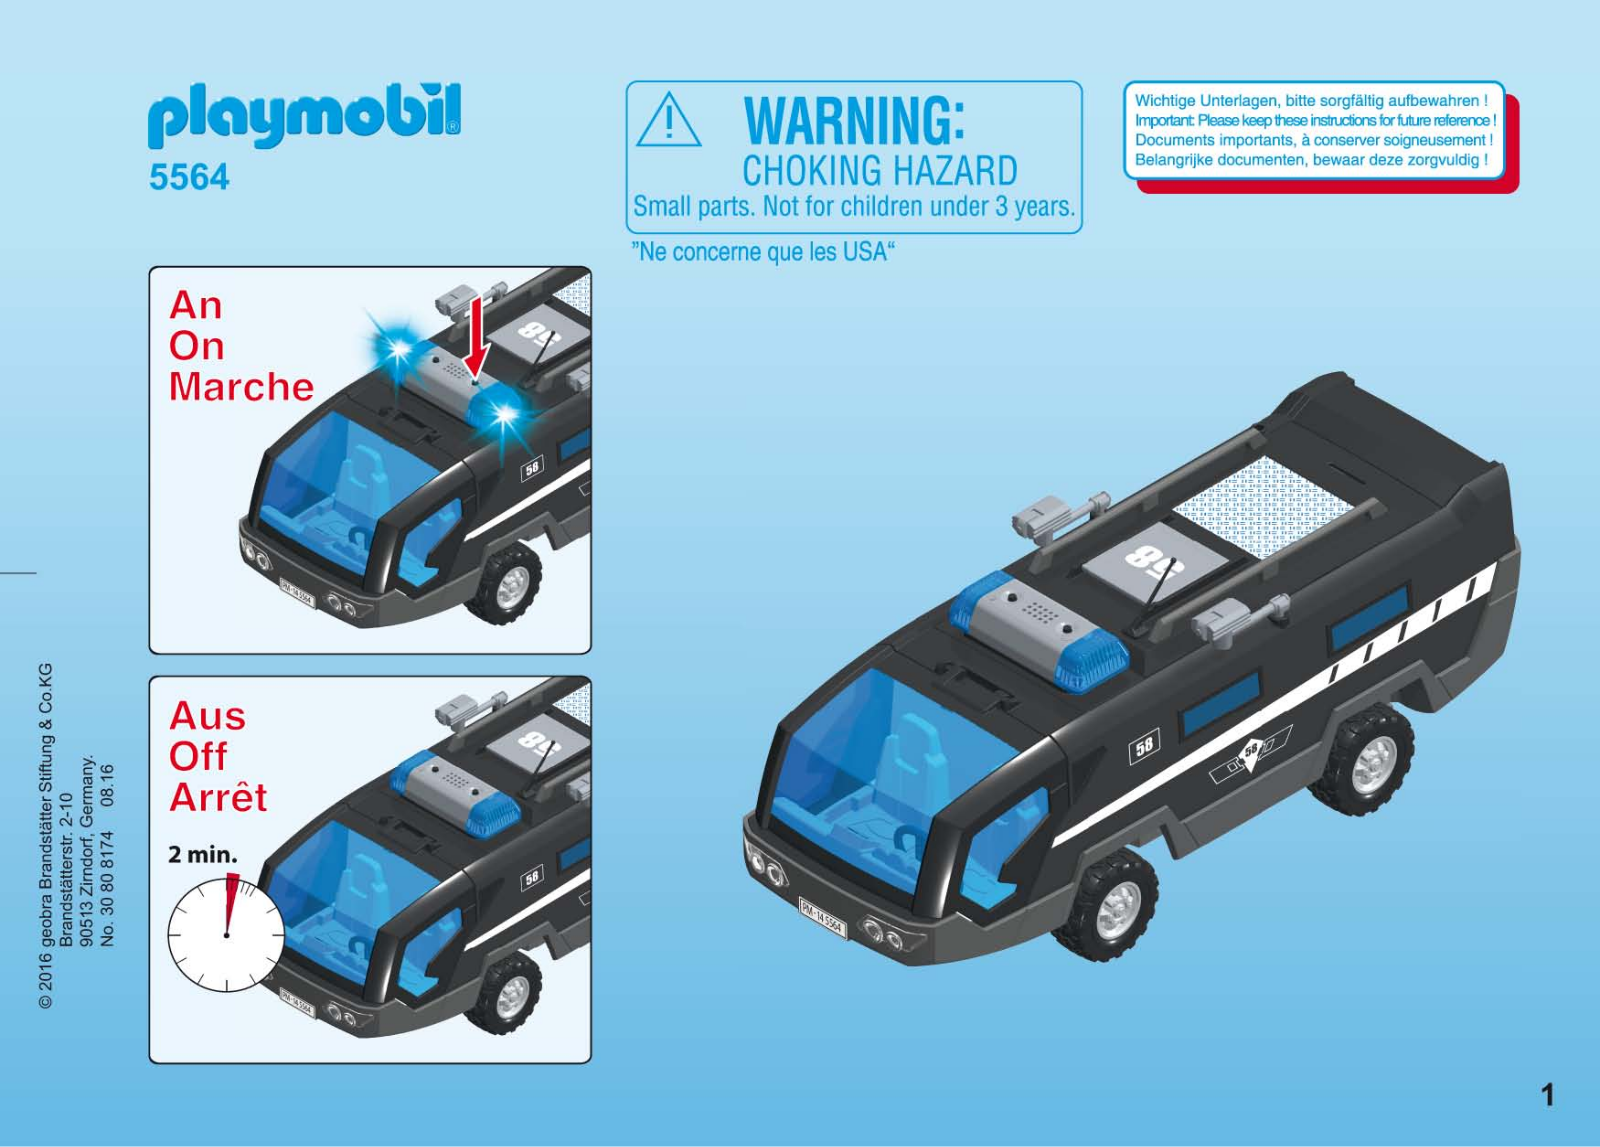 Playmobil 5564 Instructions